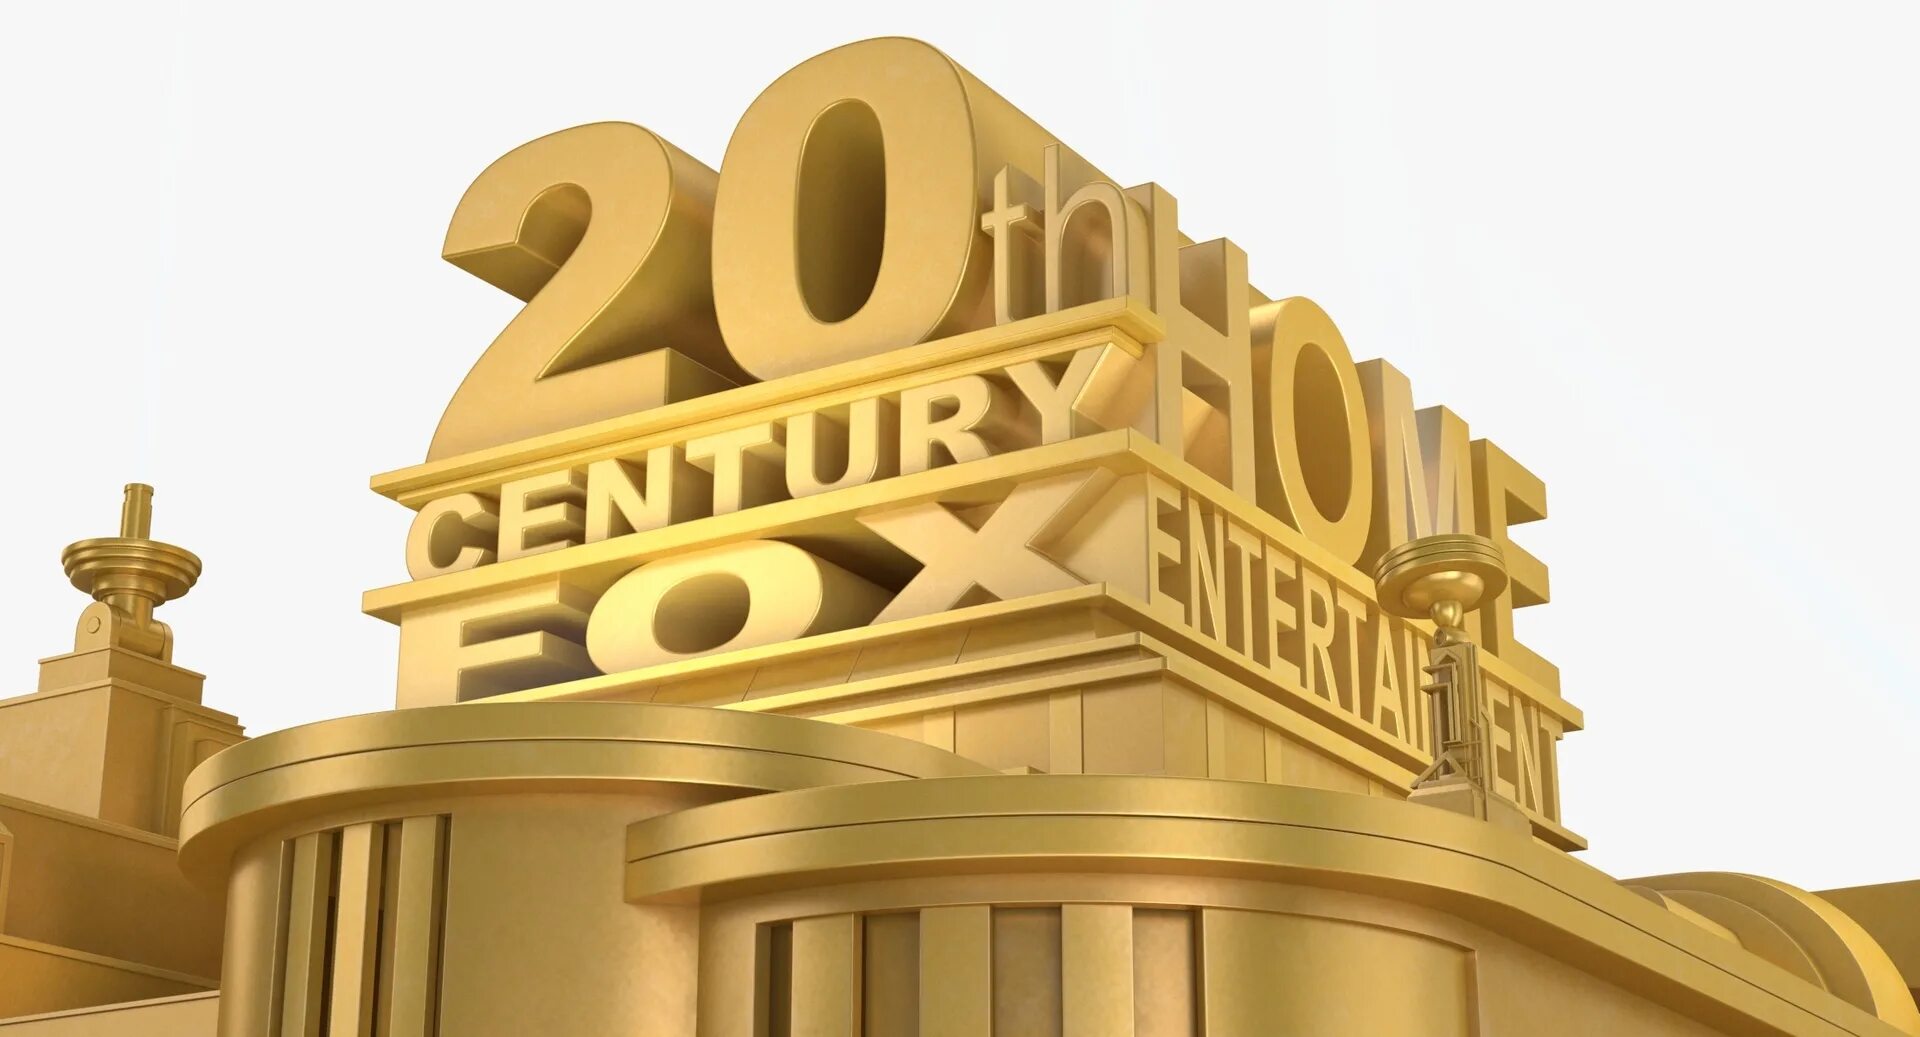 Sony 20th Century Fox. 20th Century Fox 3ds. 20th Century Fox logo. 20 Век Фокс Студиос. 20 th century